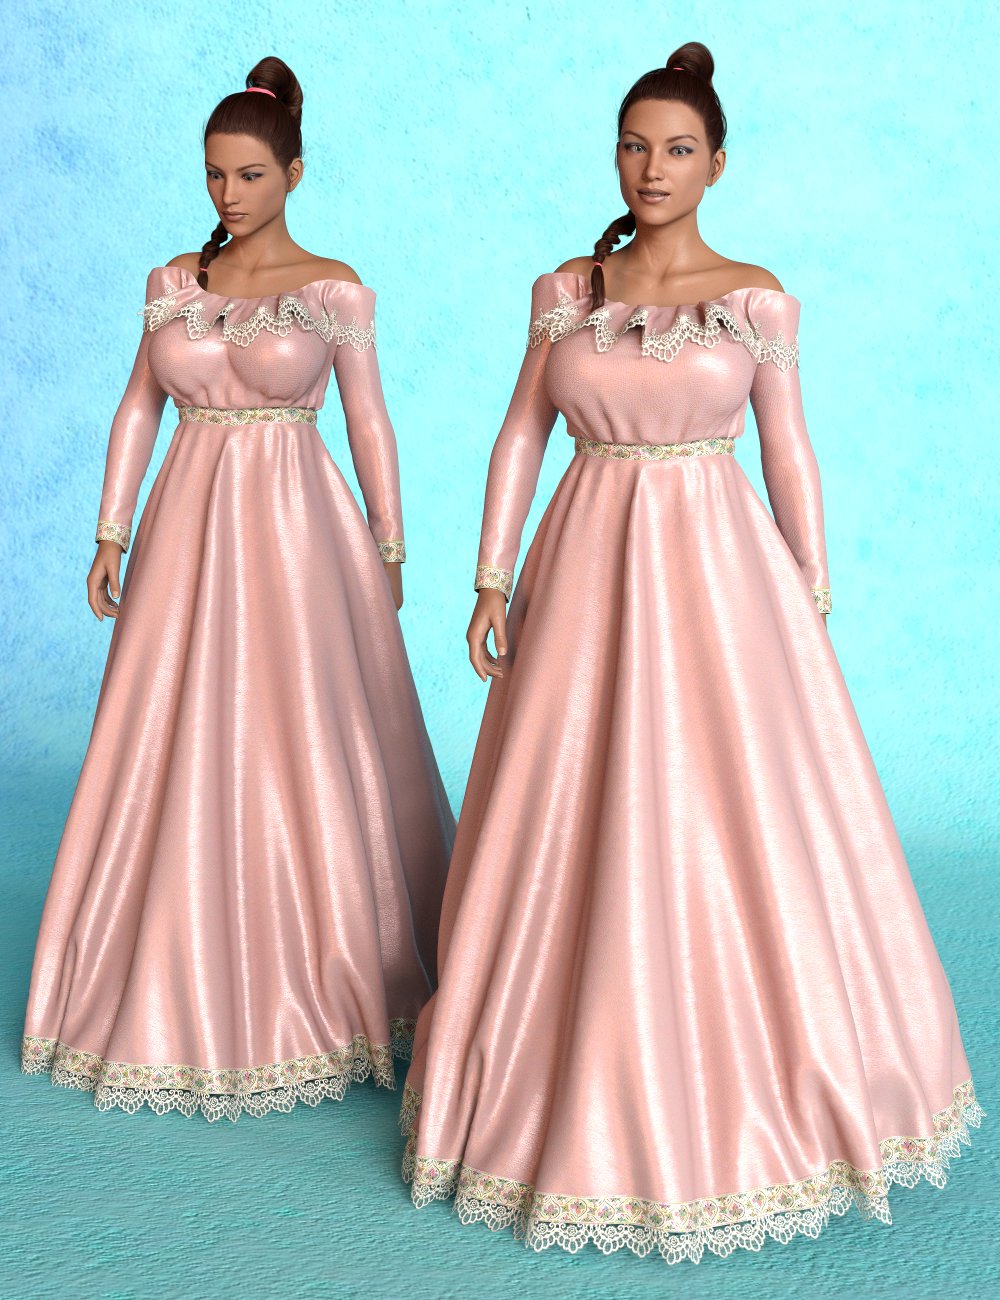 SY Clothing Breast Helper Genesis 8 Female by: Sickleyield, 3D Models by Daz 3D